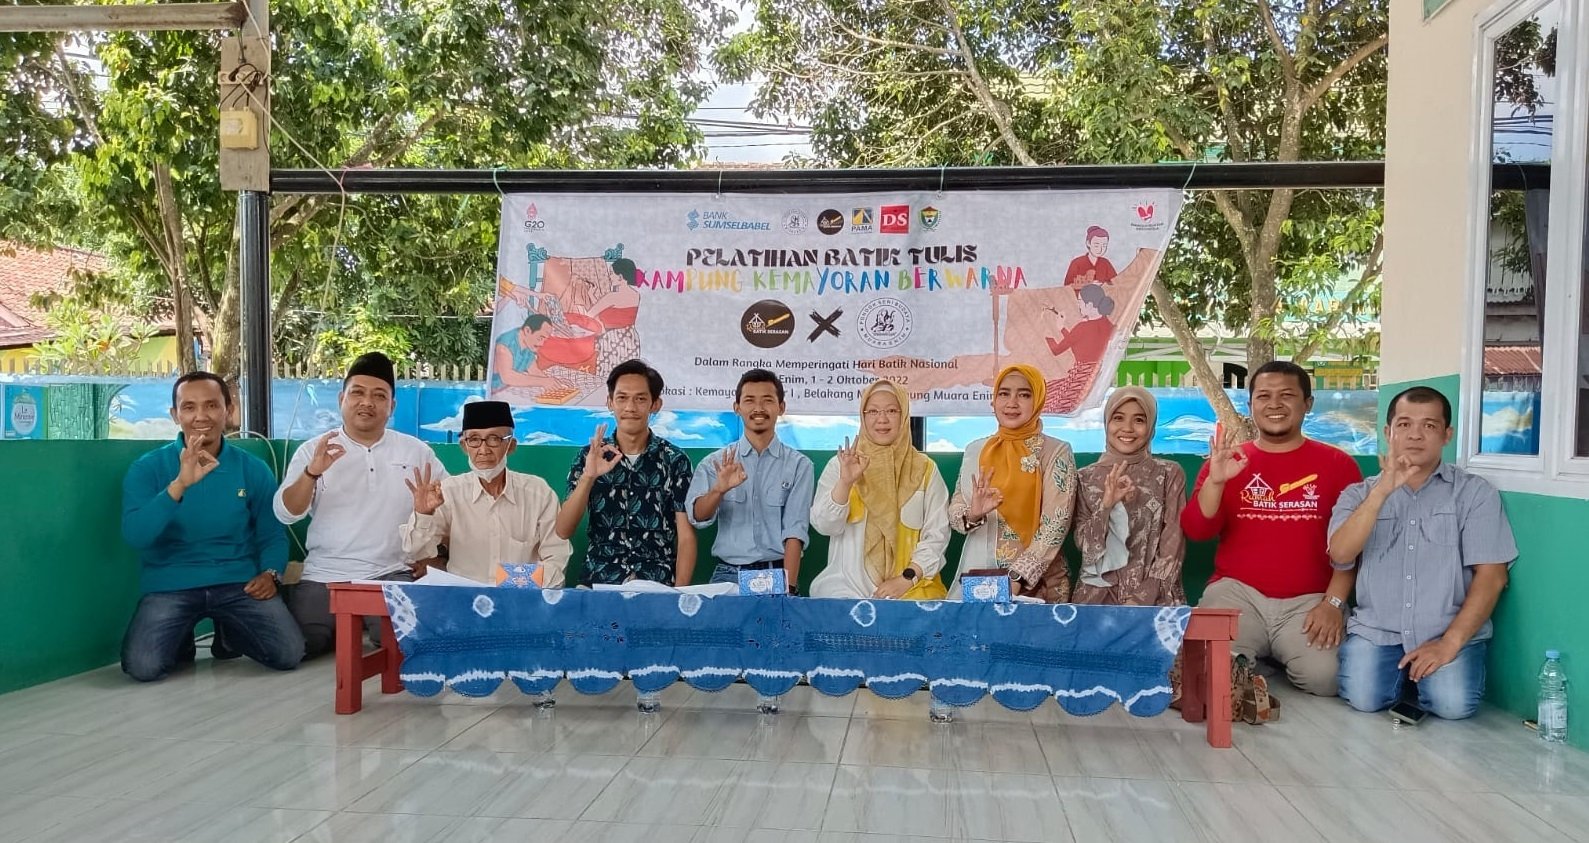 Rumah Batik Serasna dan Pondok Seni Budaya Ananaguai laksanakan Pelatihan Batik Tulis di Kampung Kemayoran